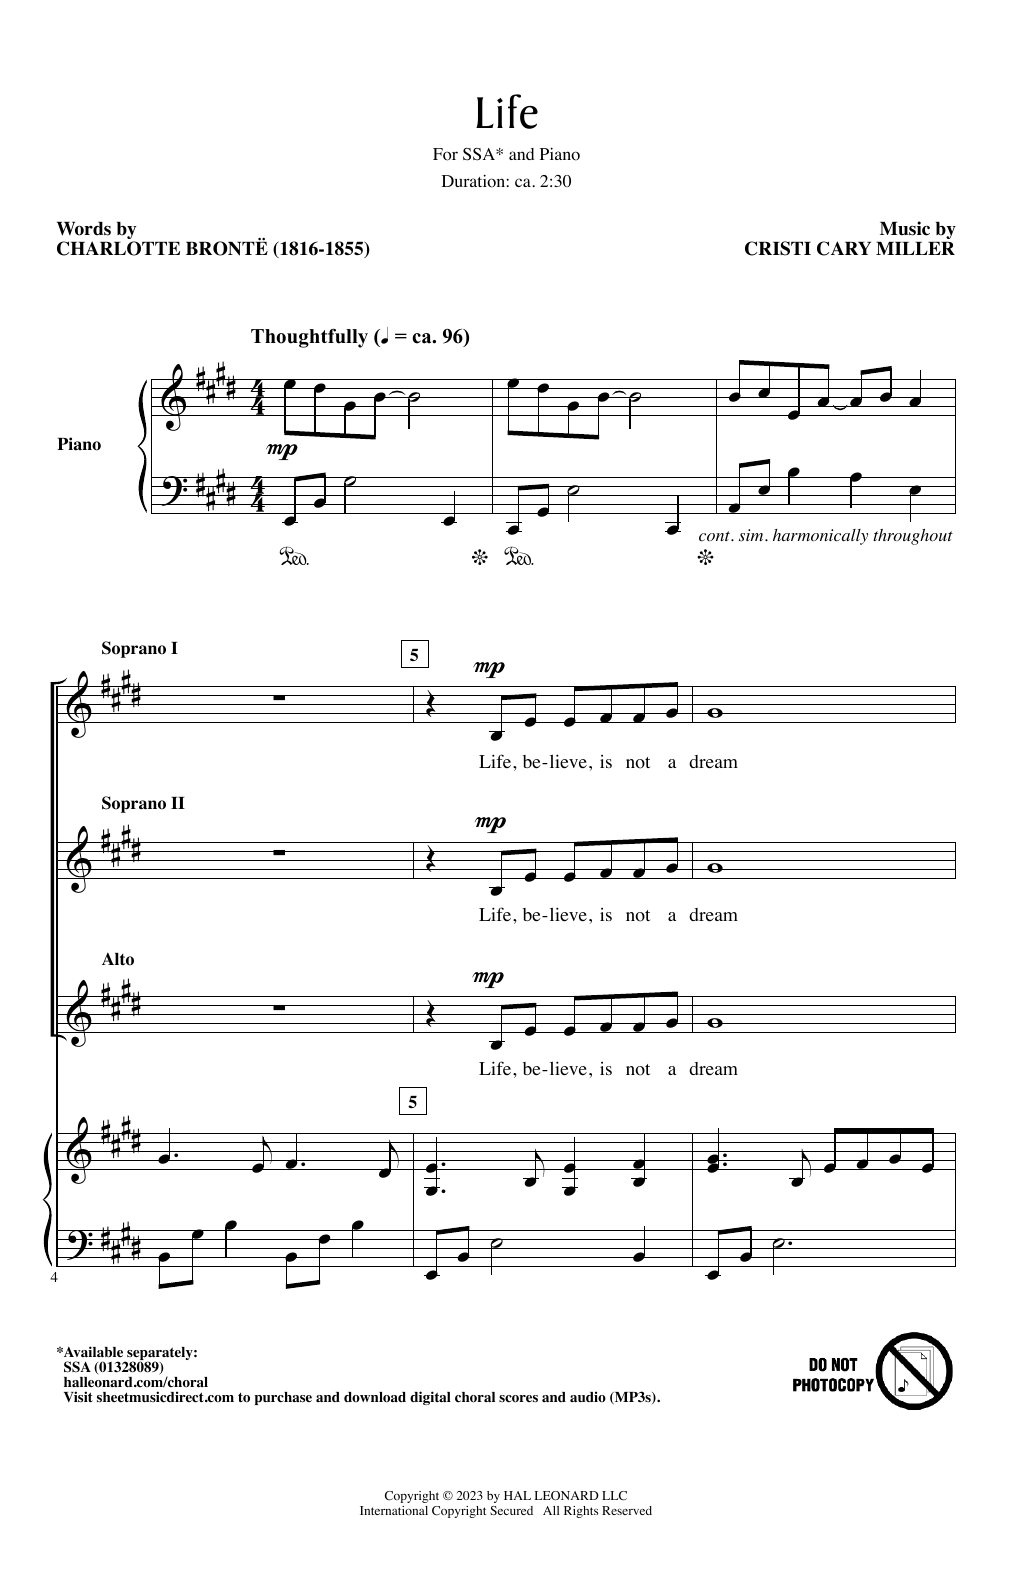 Cristi Cary Miller Life sheet music notes printable PDF score